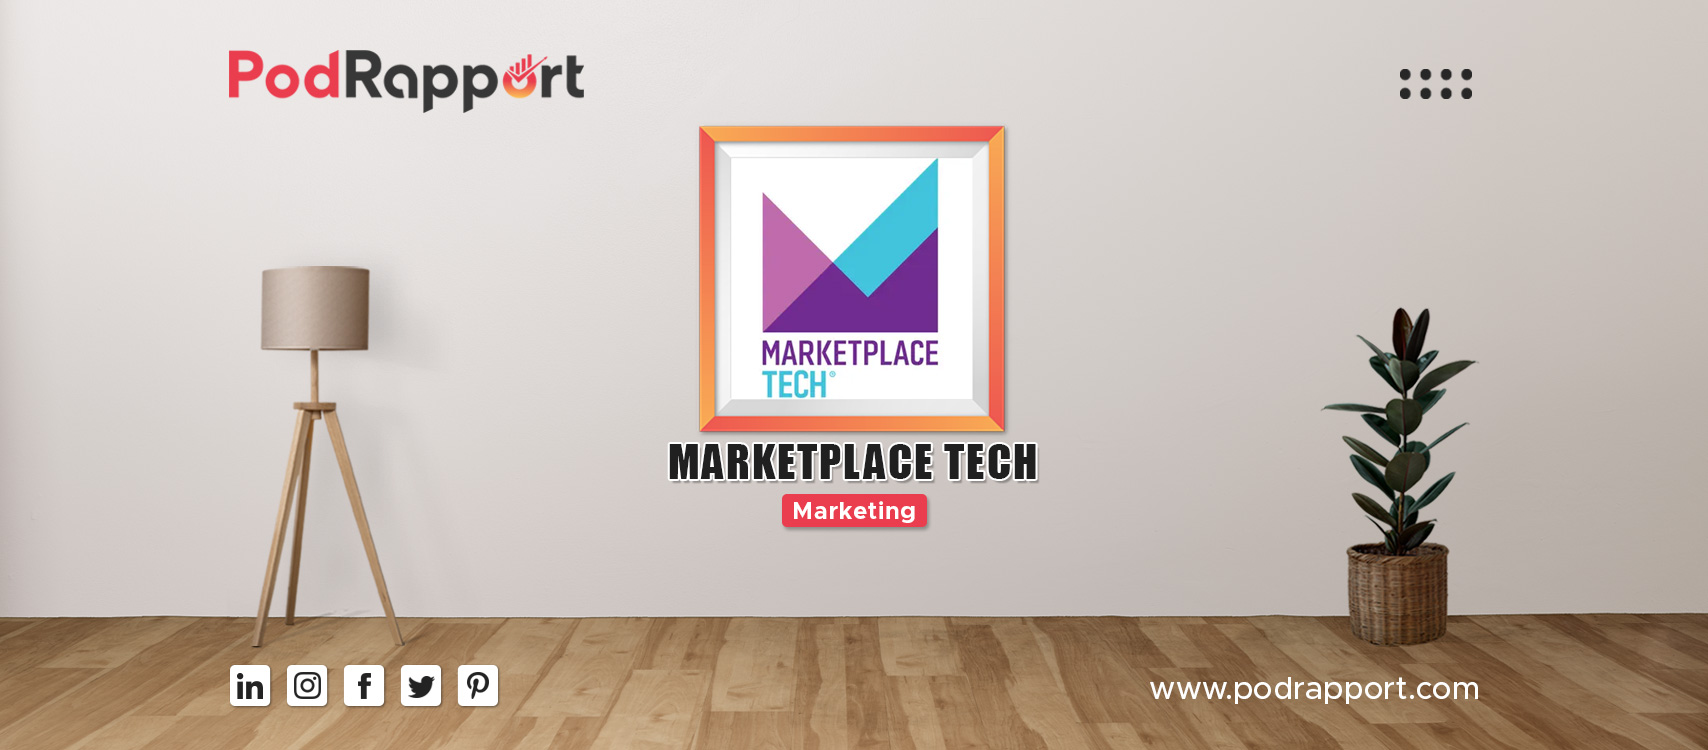 Marketplace Tech